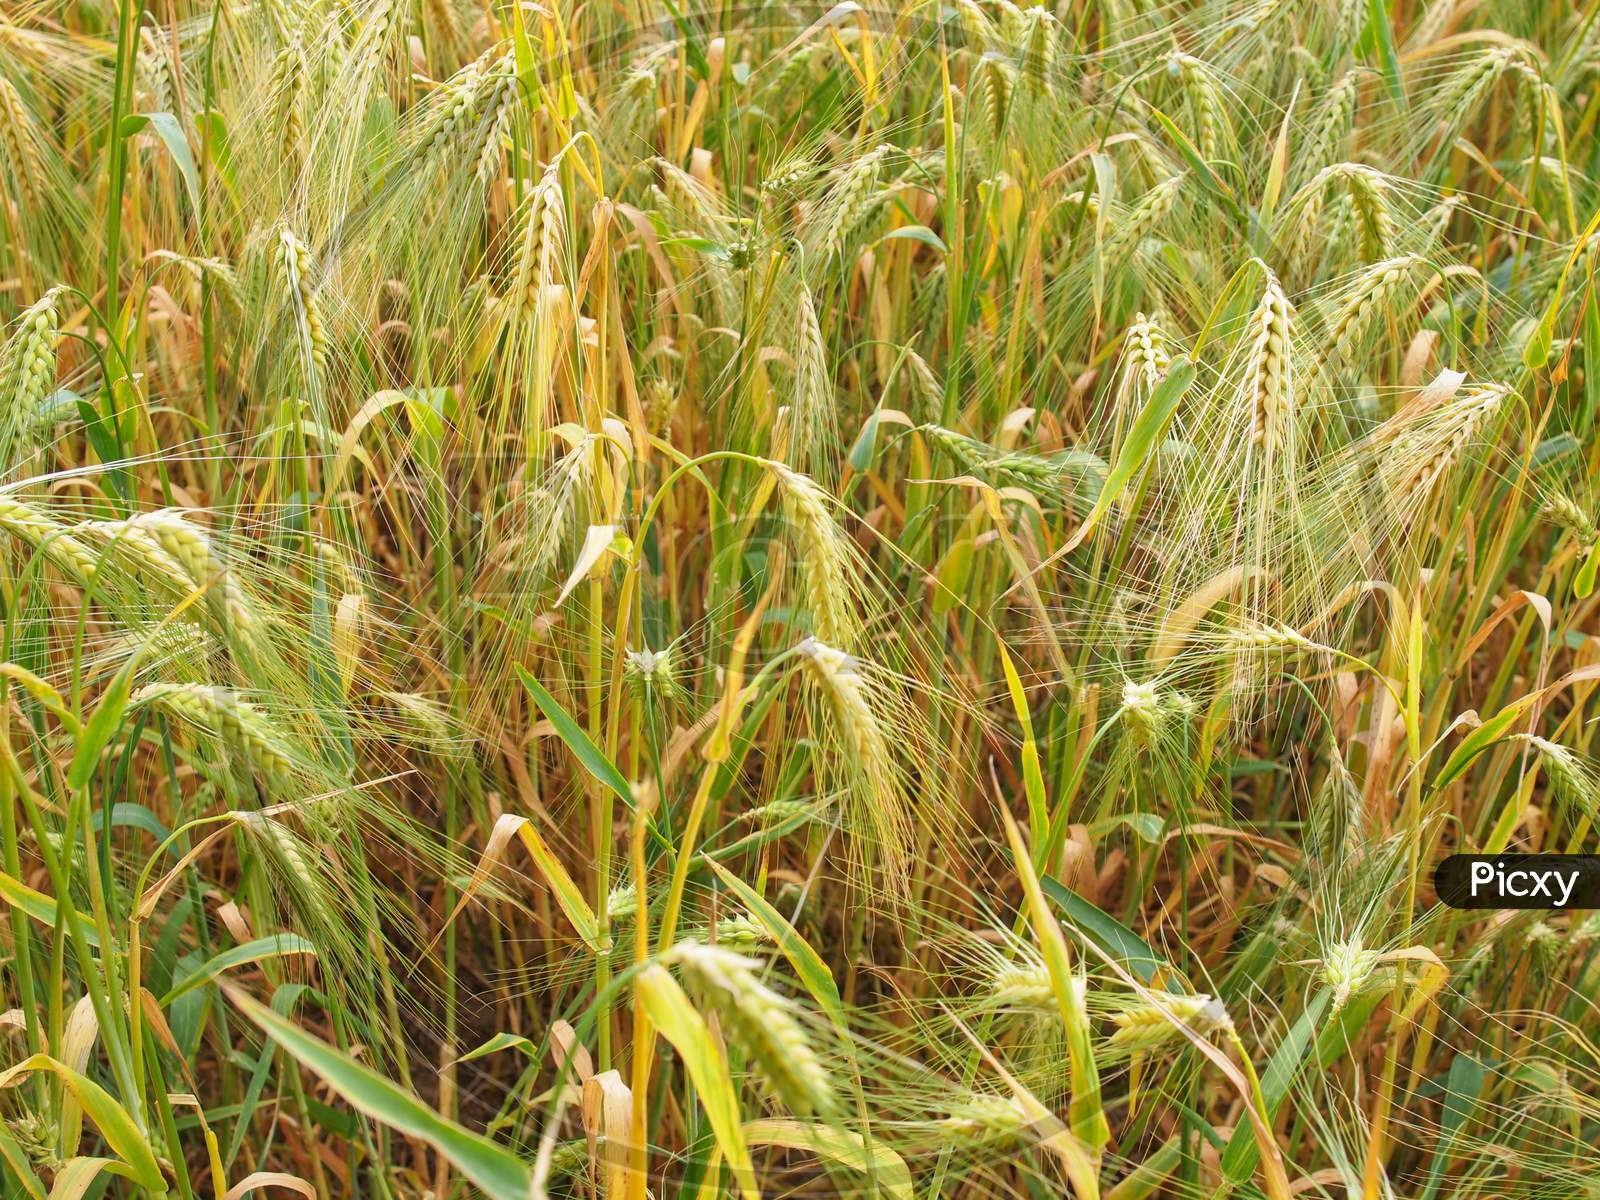 Barleycorn Field Background